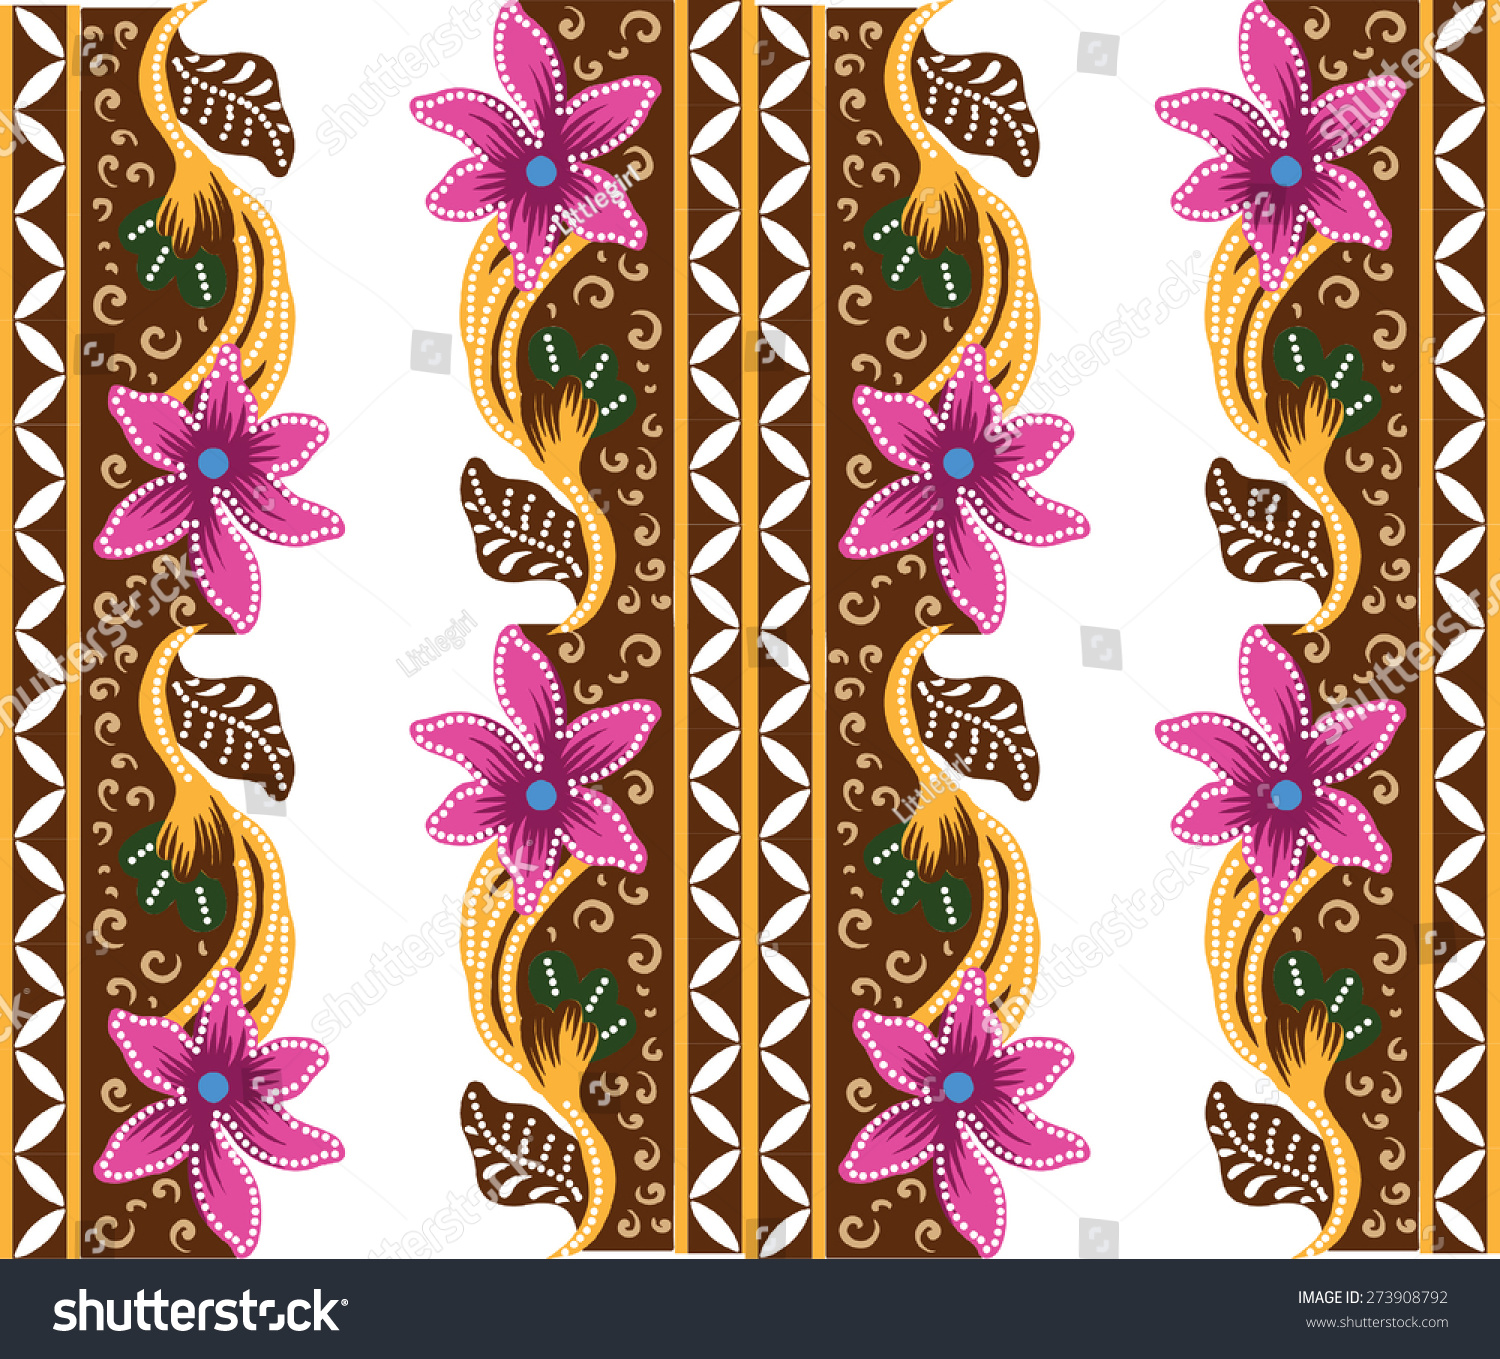 batik pattern design vintage fabric stock vector royalty free 273908792 https www shutterstock com image vector batik pattern design vintage fabric 273908792